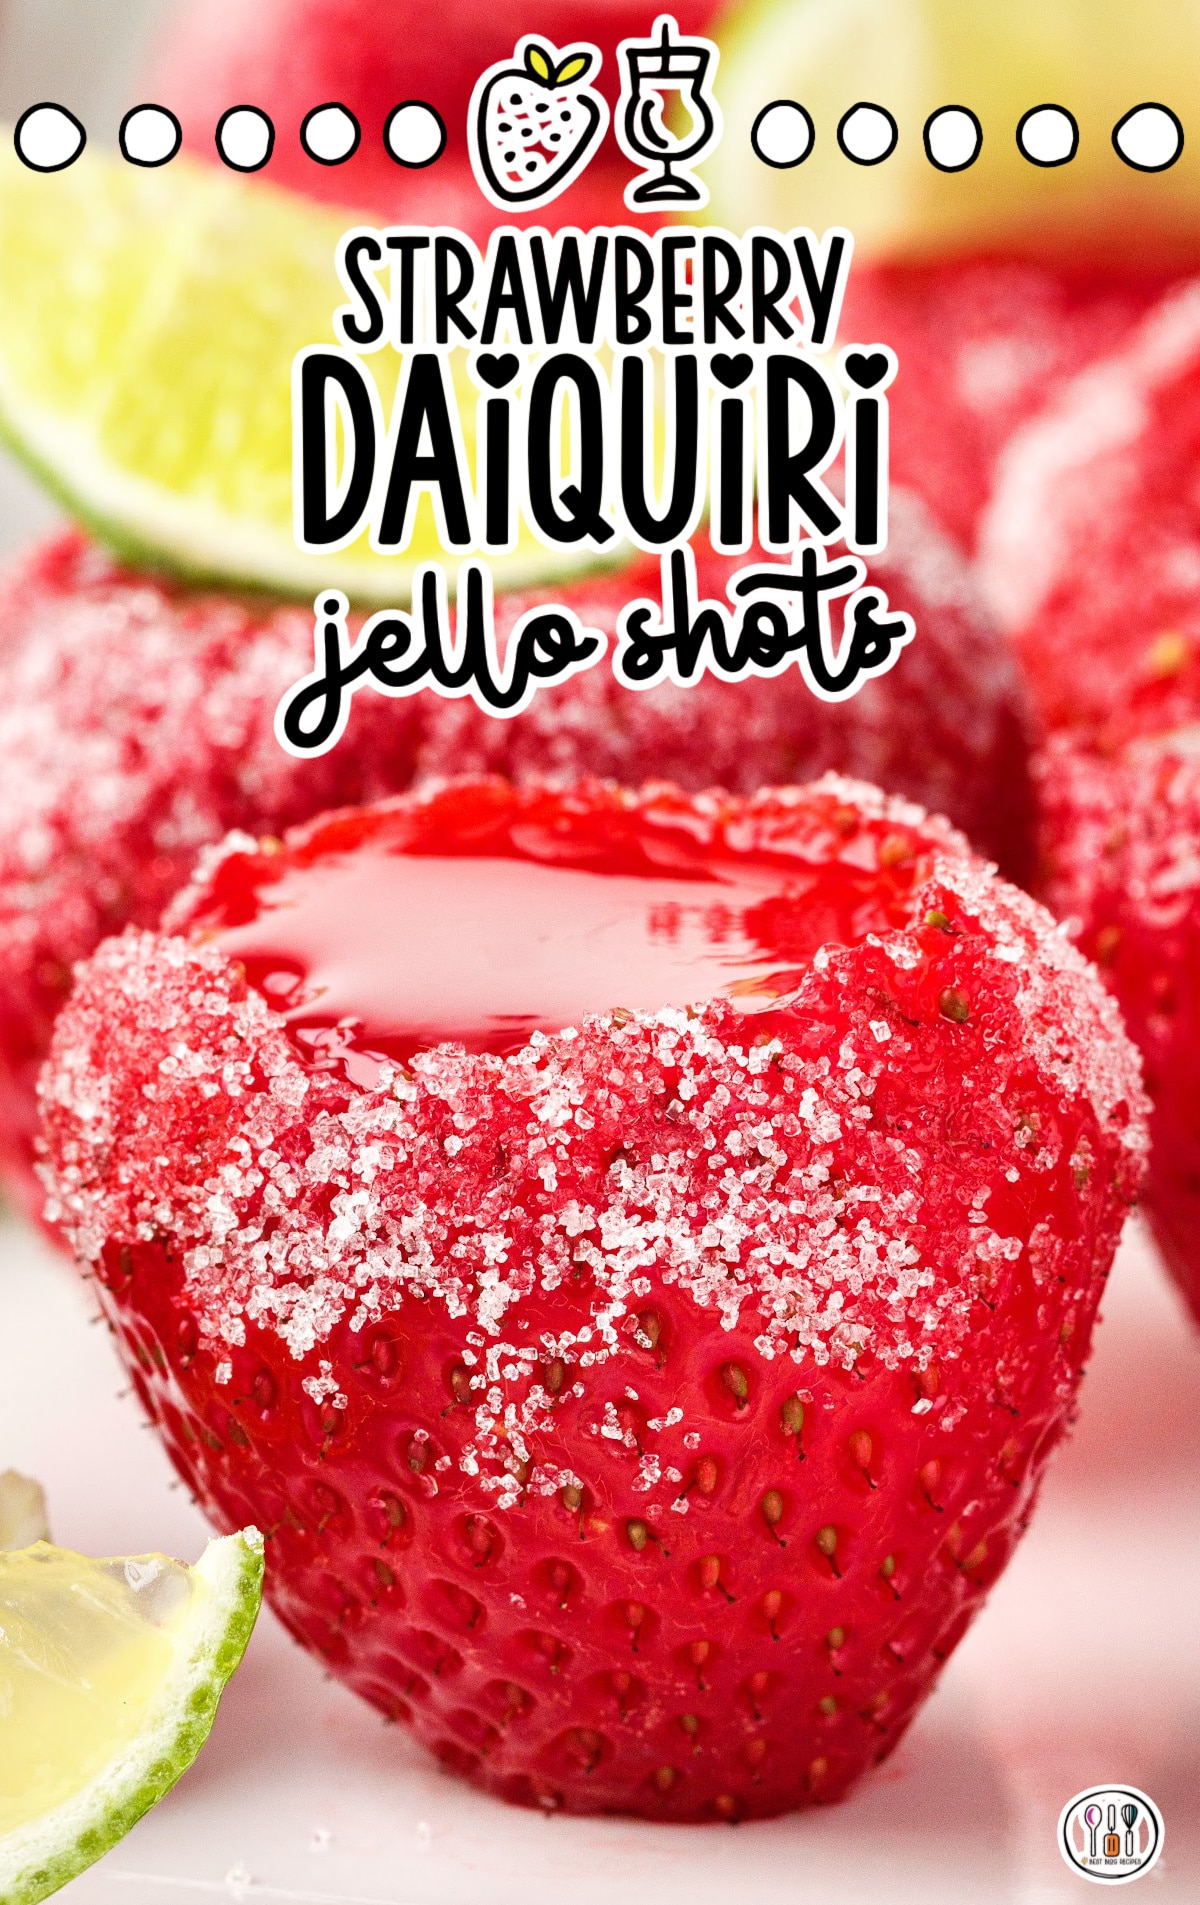 Strawberry Daiquiri Jello Shots ready to eat